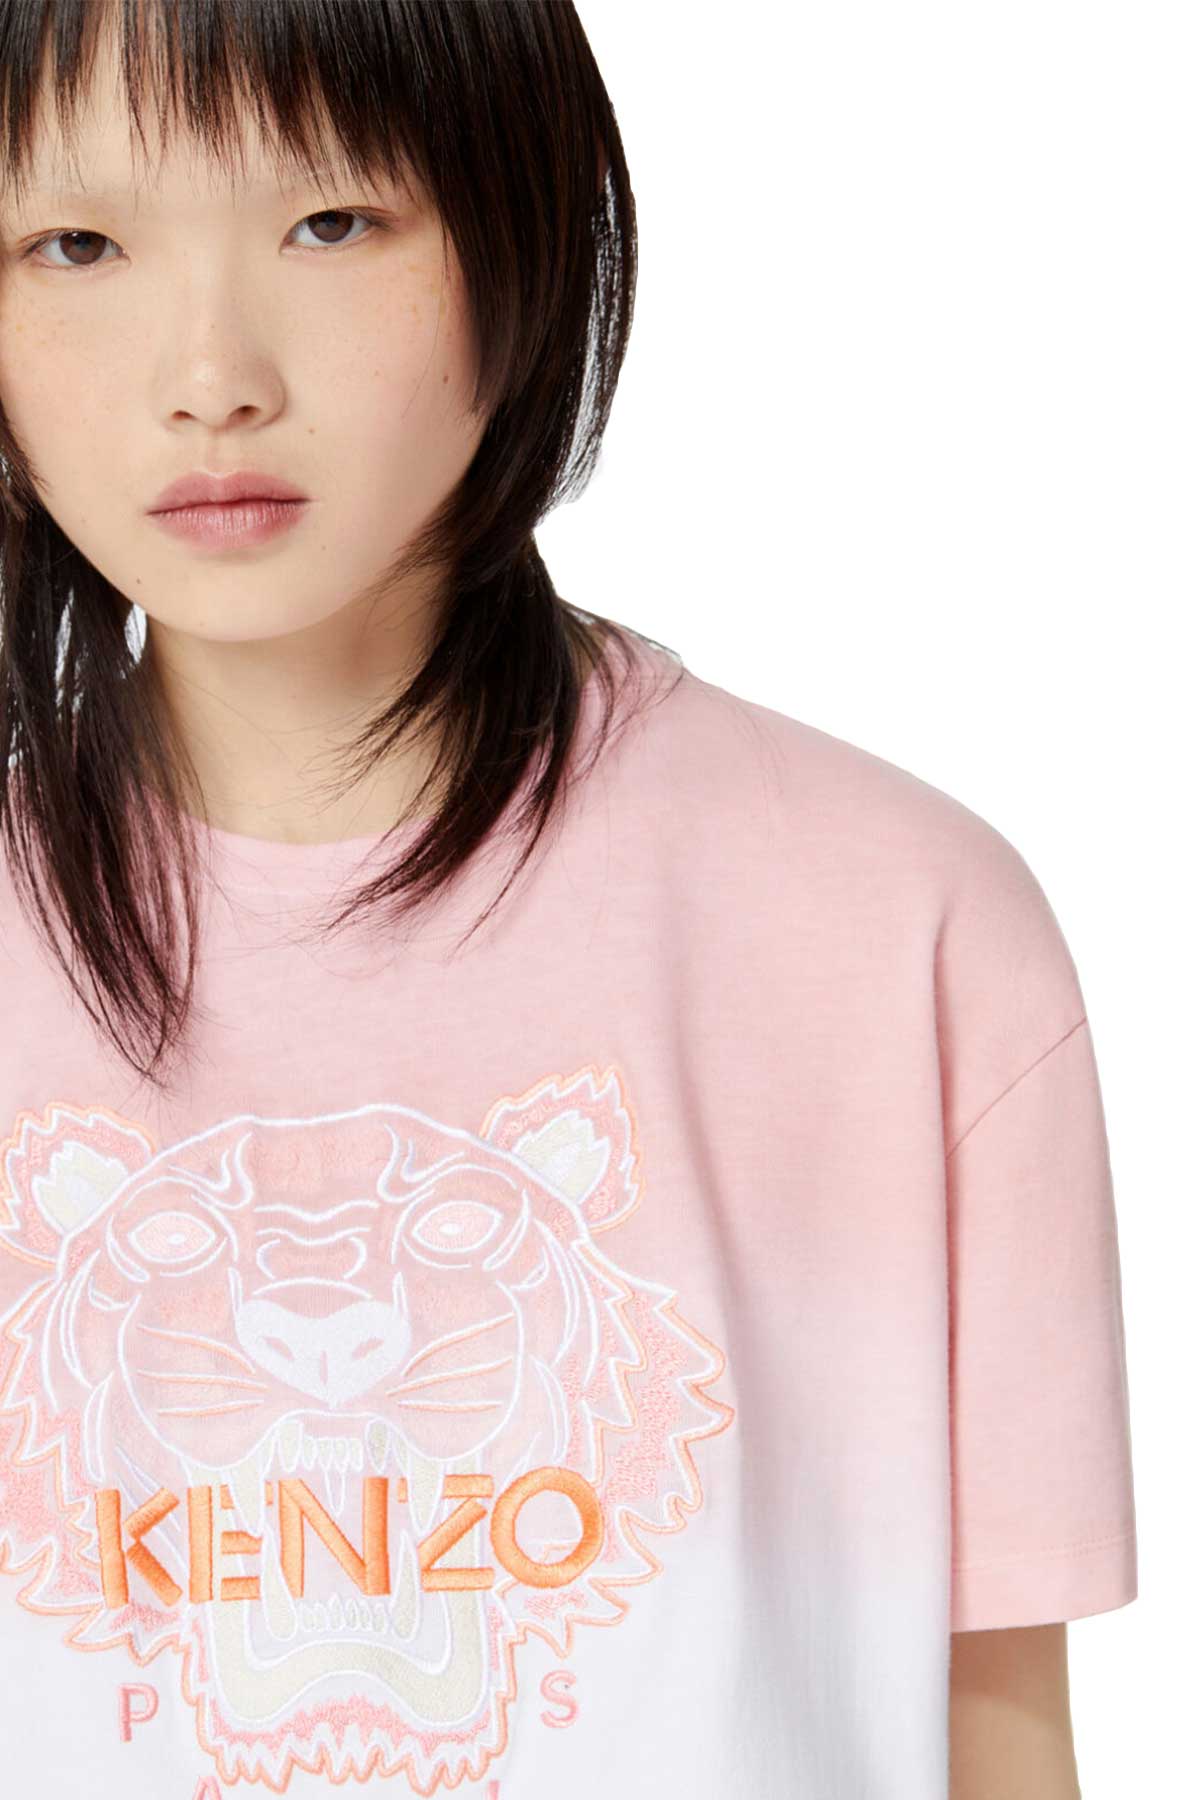 Kenzo Oversize T-shirt-Libas Trendy Fashion Store